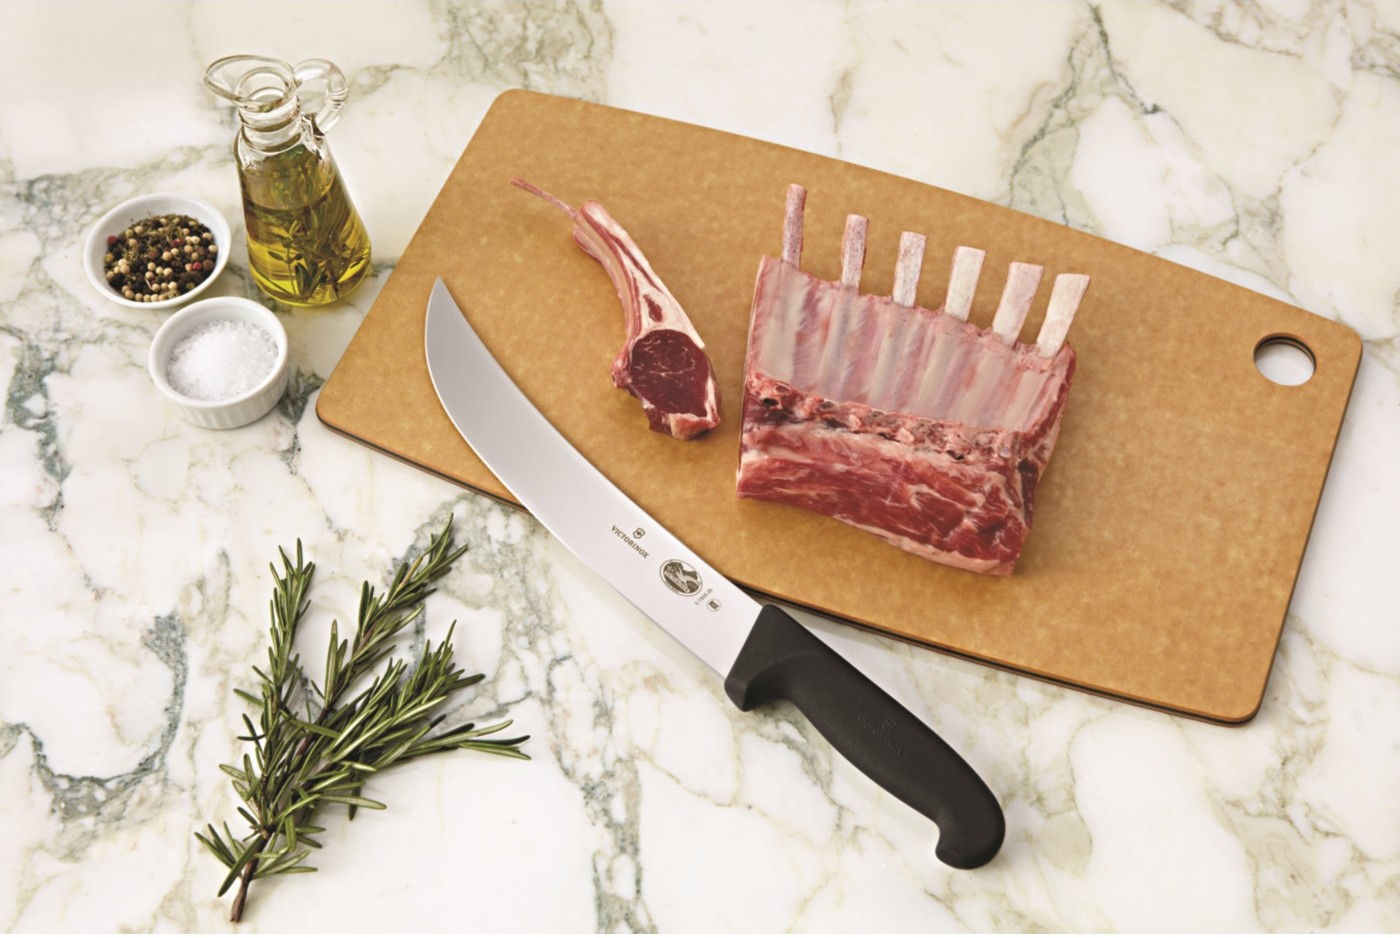 Butcher knife on cutting board